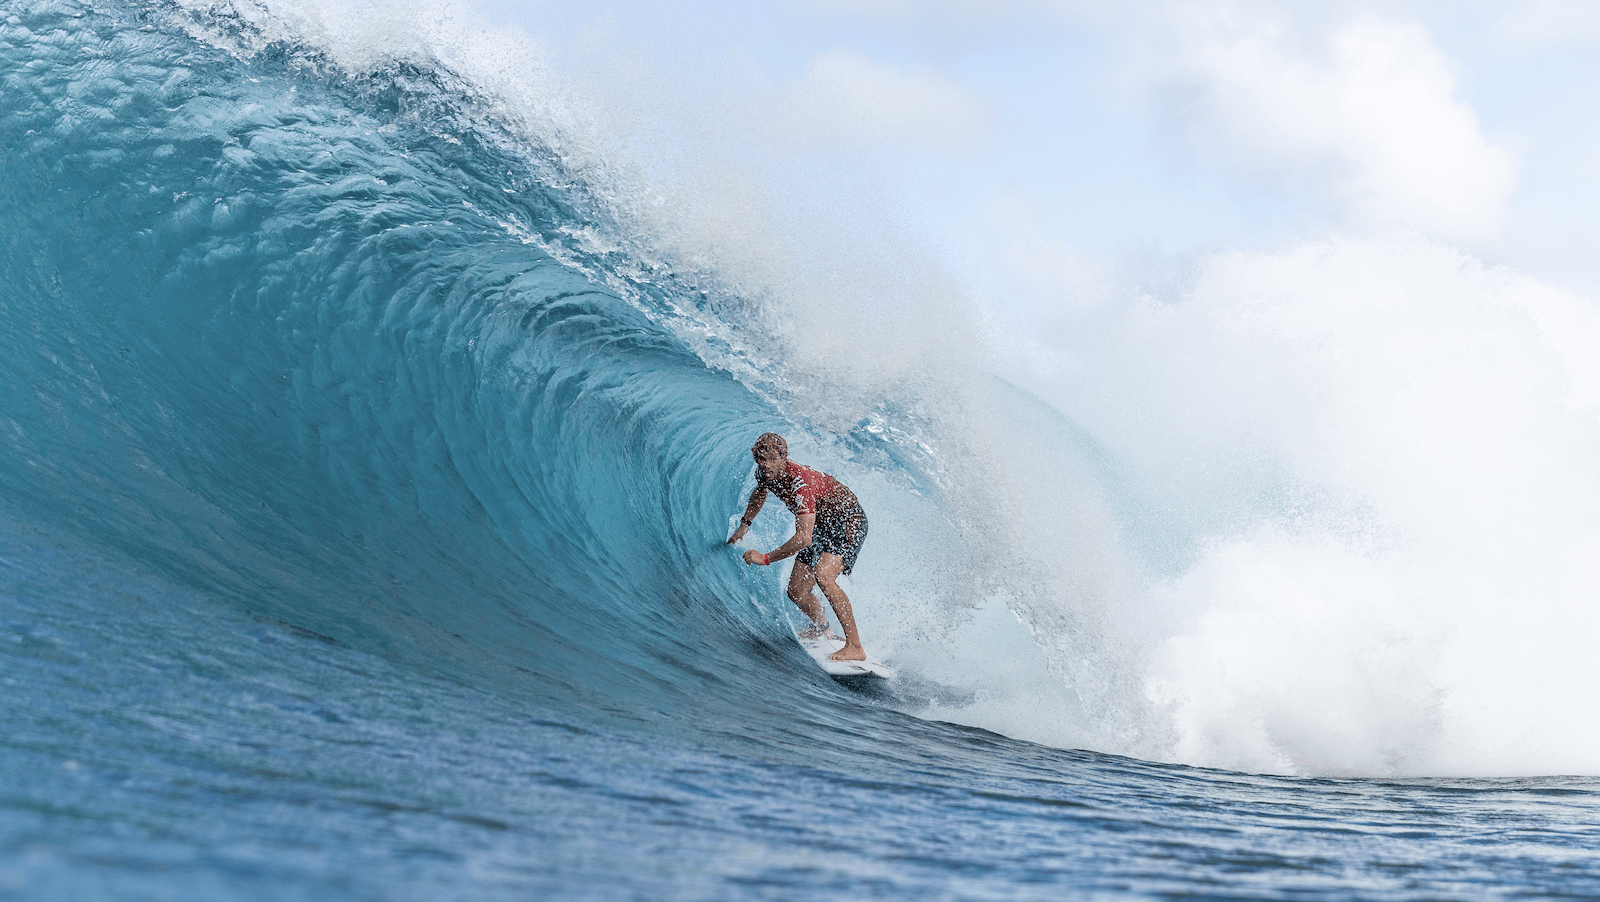 John John Florence_Oahu_Billabong Pipeline Pro_credit Tony Heff:World Surf League via Getty Images_800x450